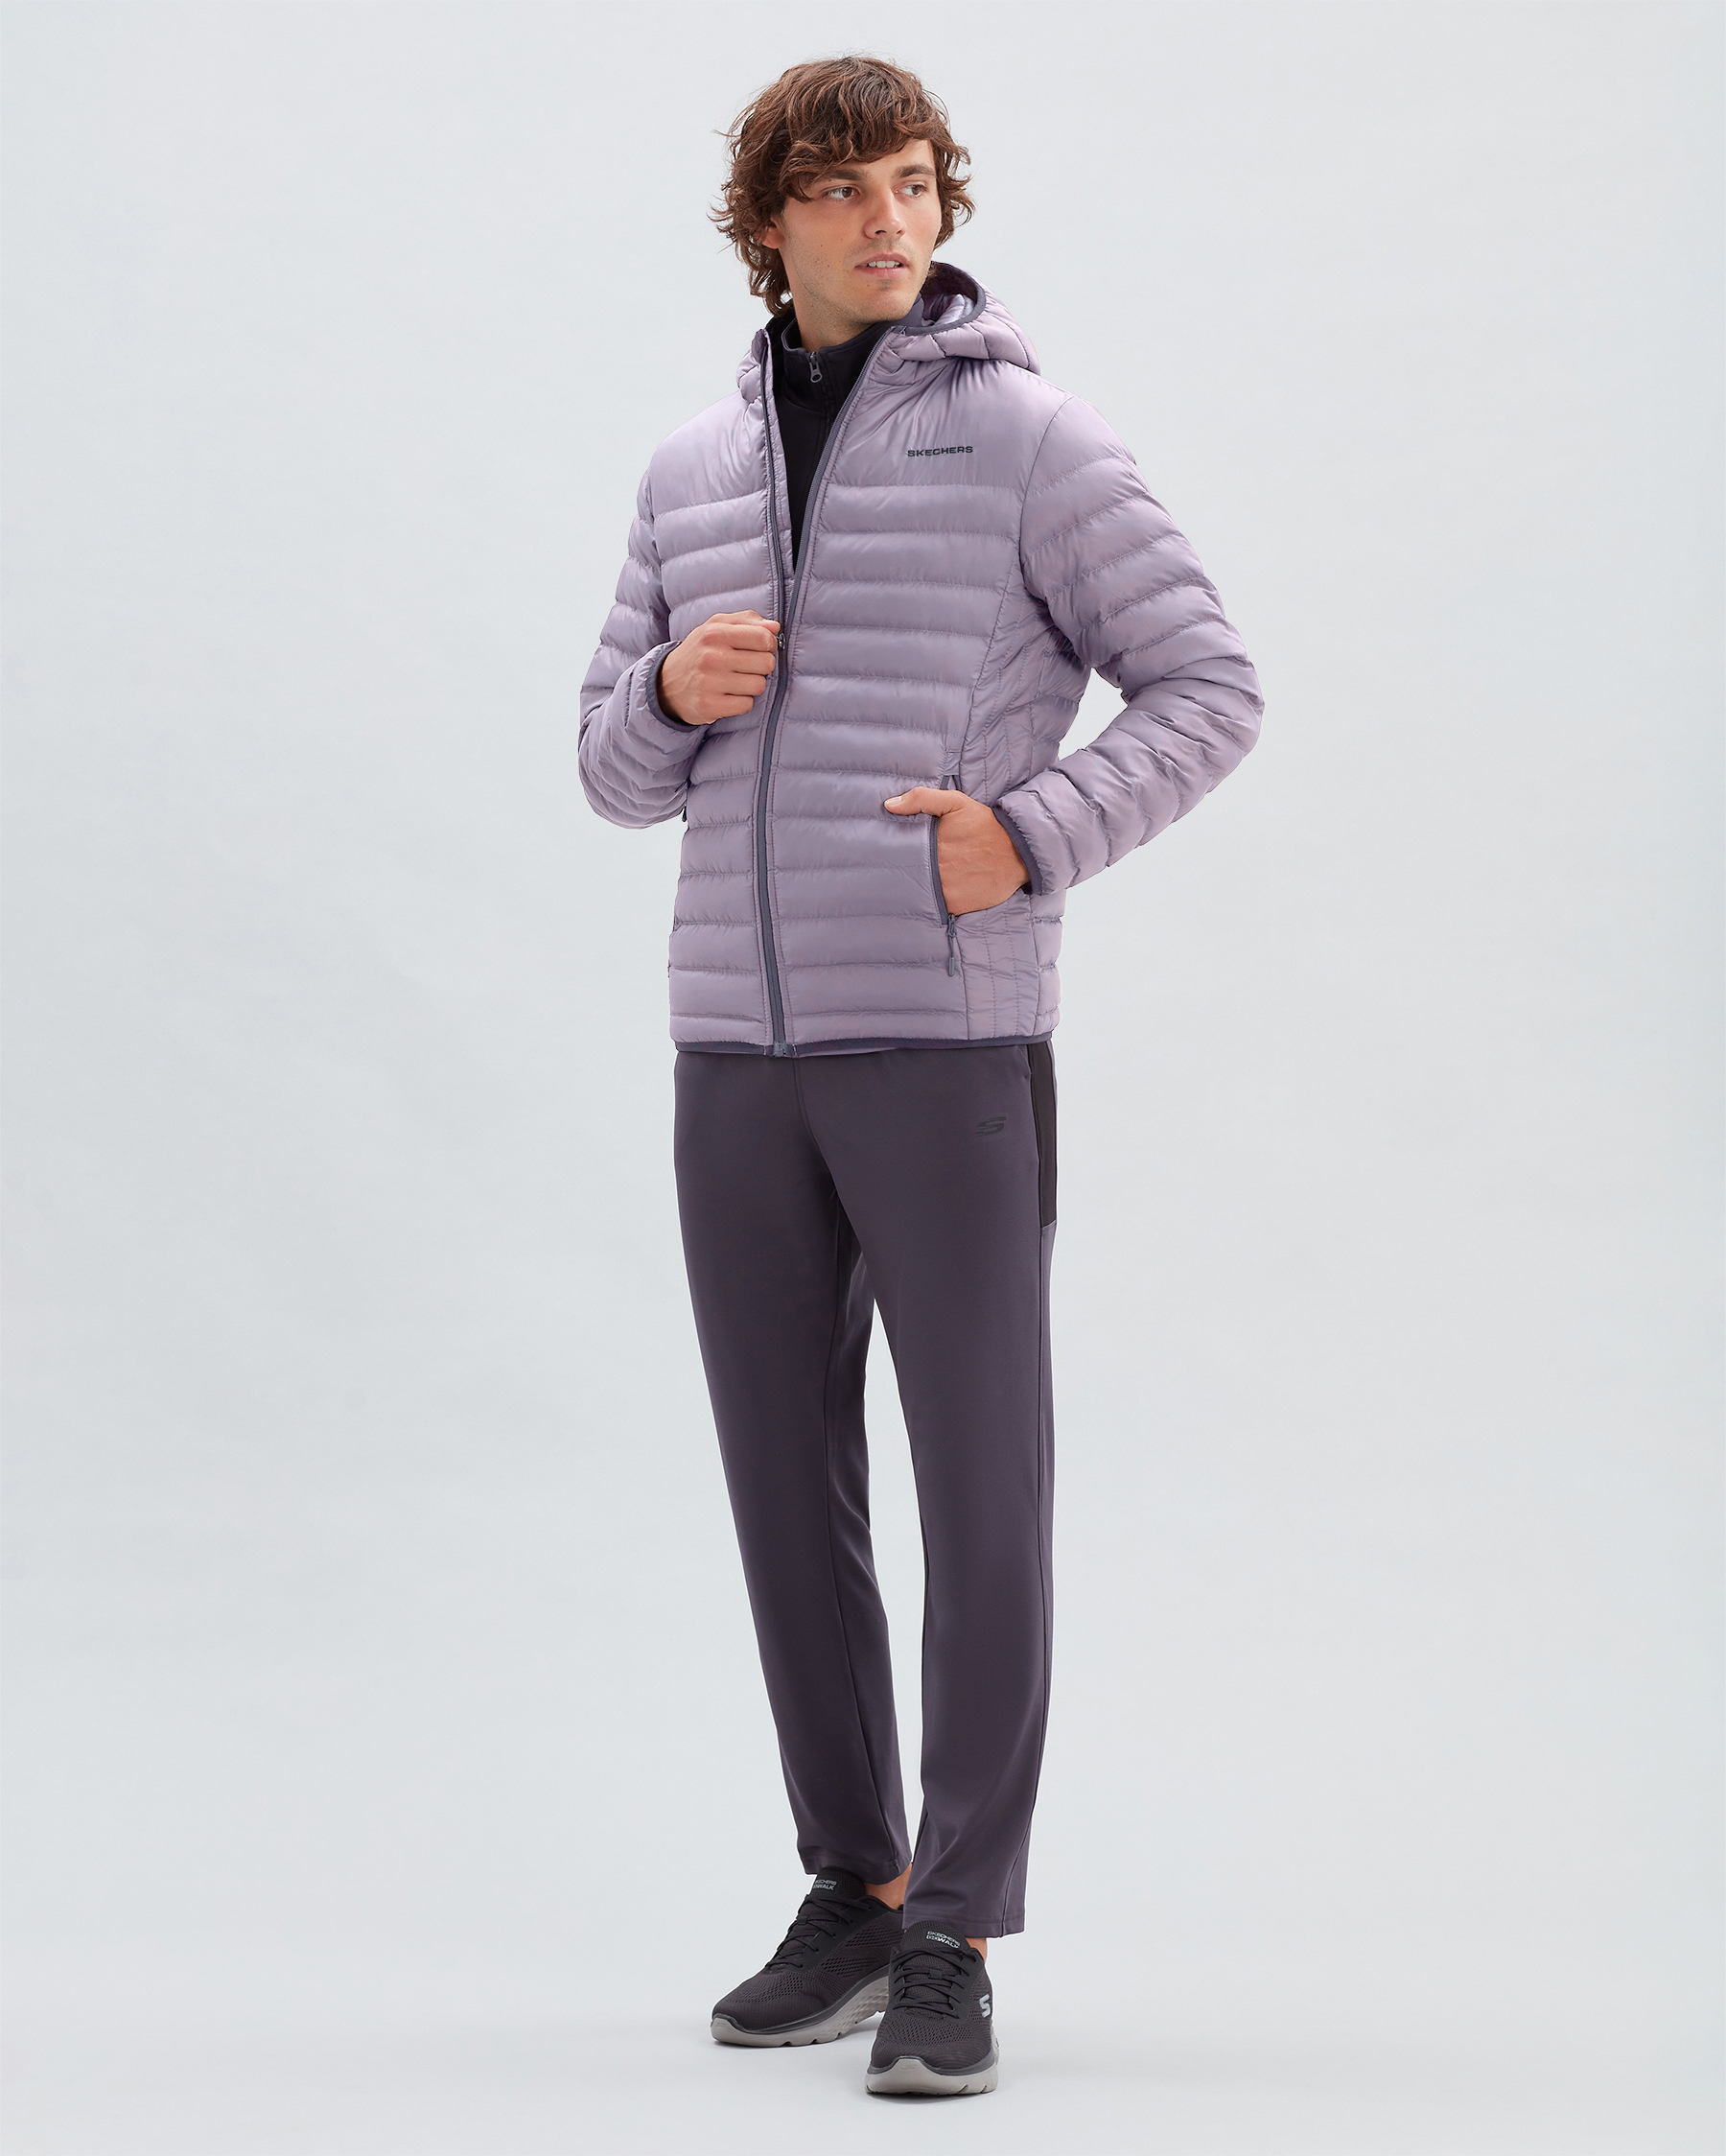 Gray/Multicolored M Maglificio cardigan discount 98% WOMEN FASHION Jumpers & Sweatshirts Cardigan Casual 